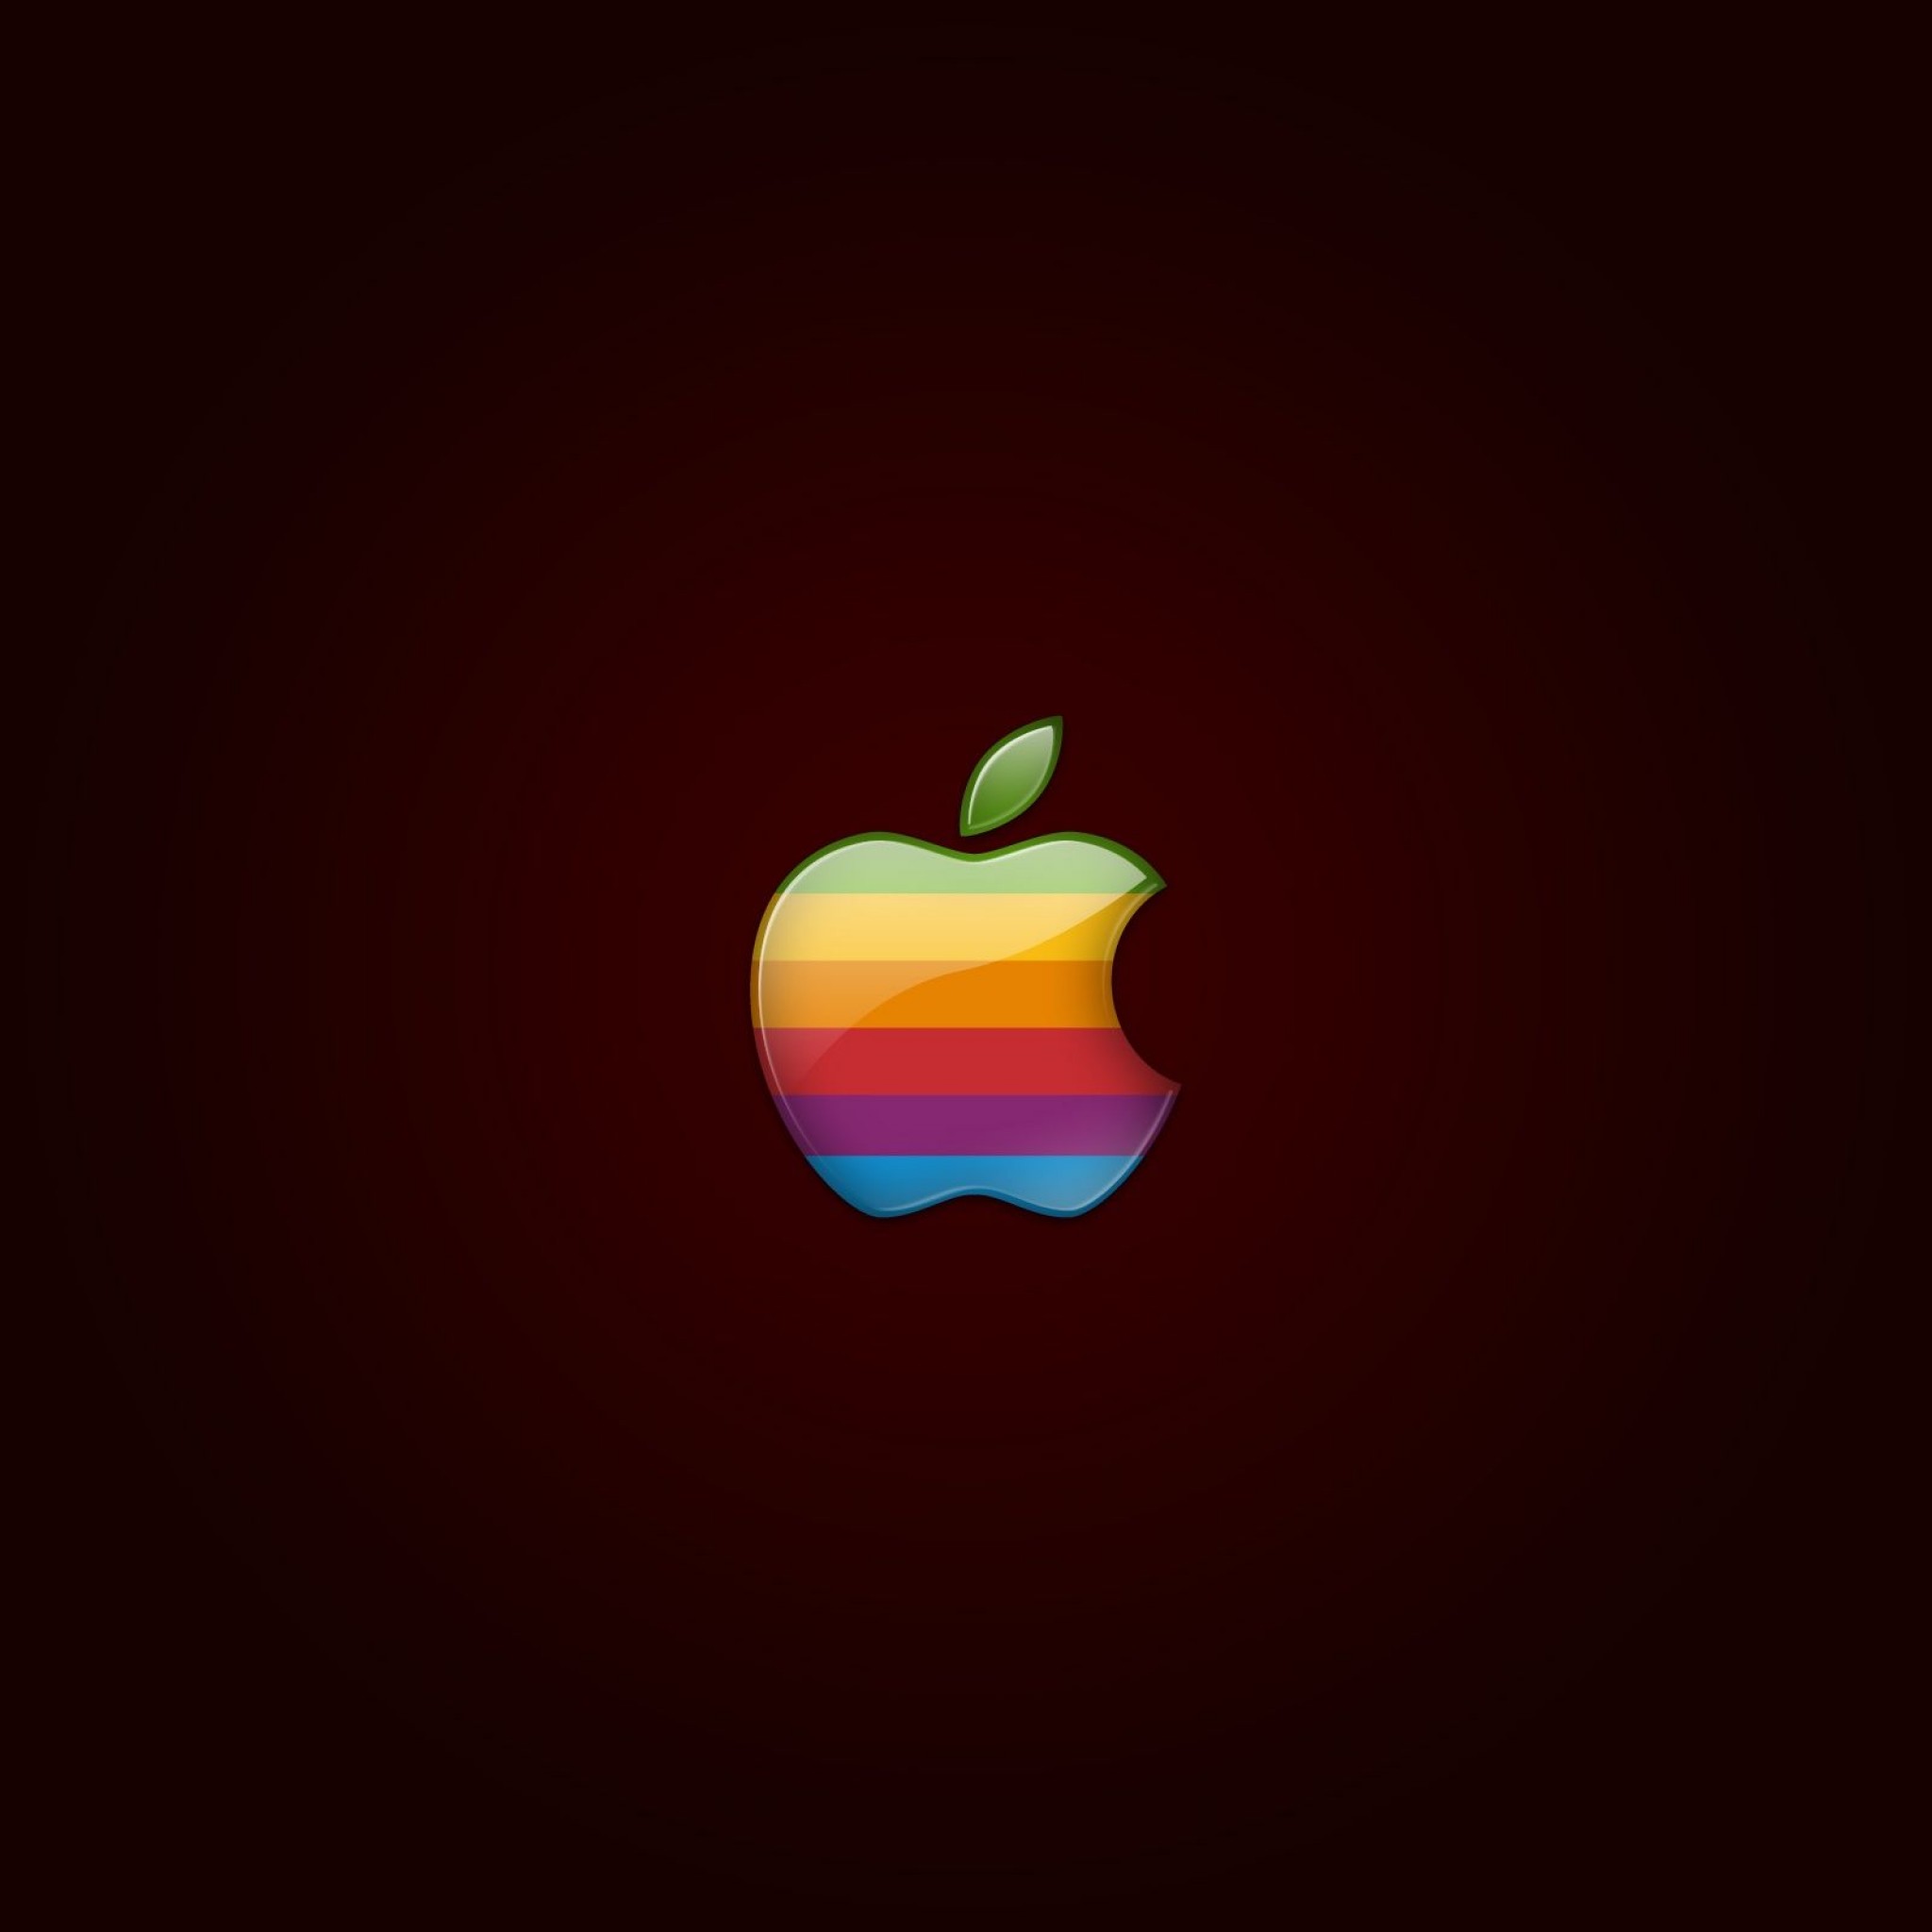 Apple Colorful Logo 最高の無料壁紙サイト Ipad タブレット壁紙ギャラリー